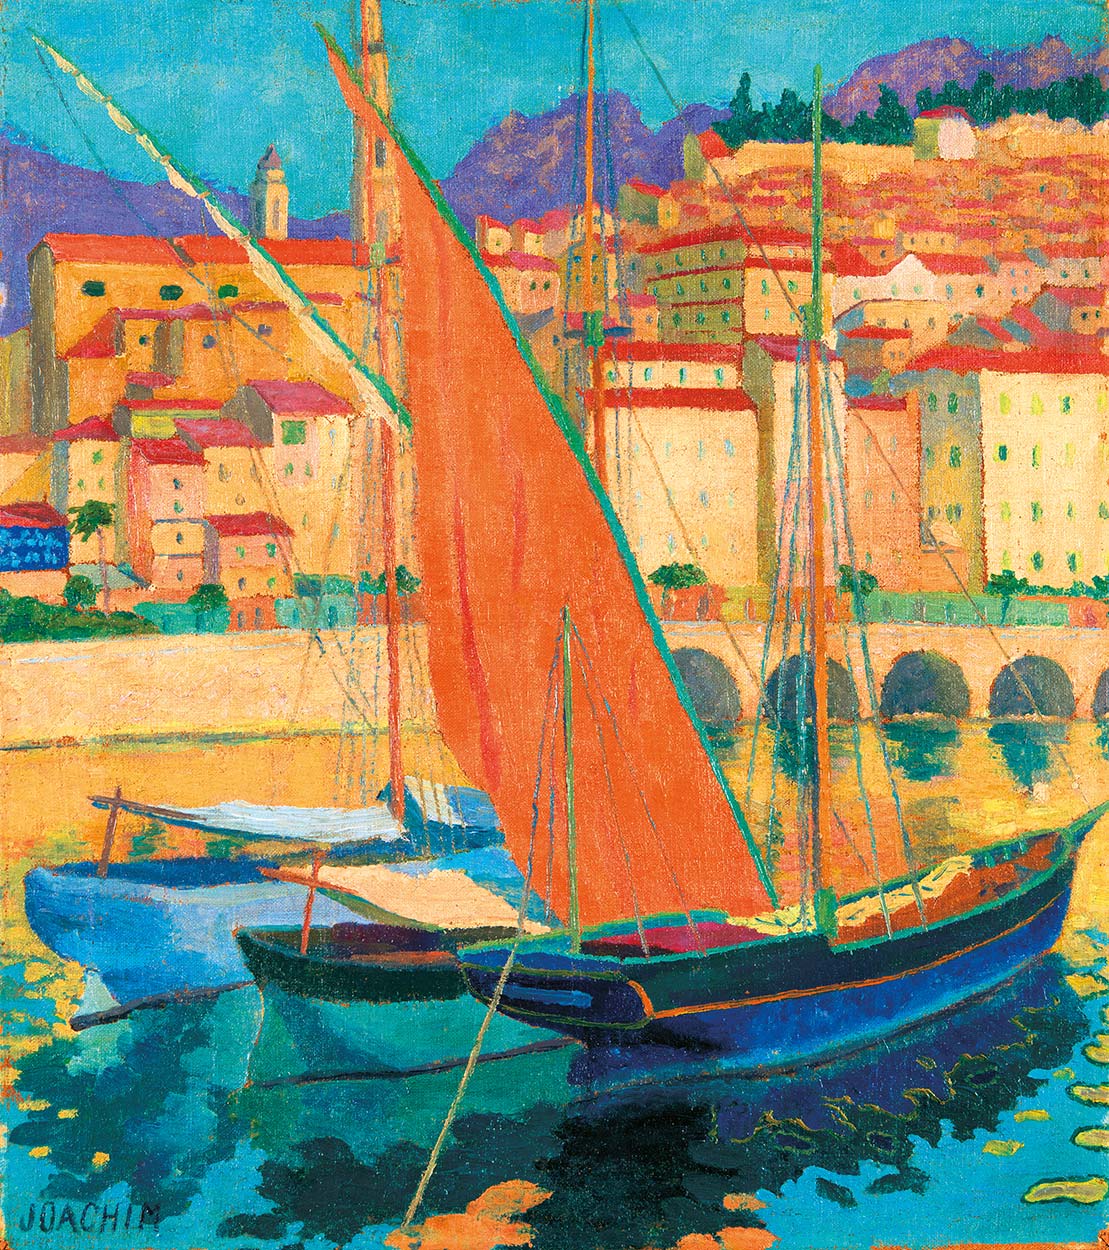 Joachim Ferenc (Csejtei) (1882-1964) Sailing Boat